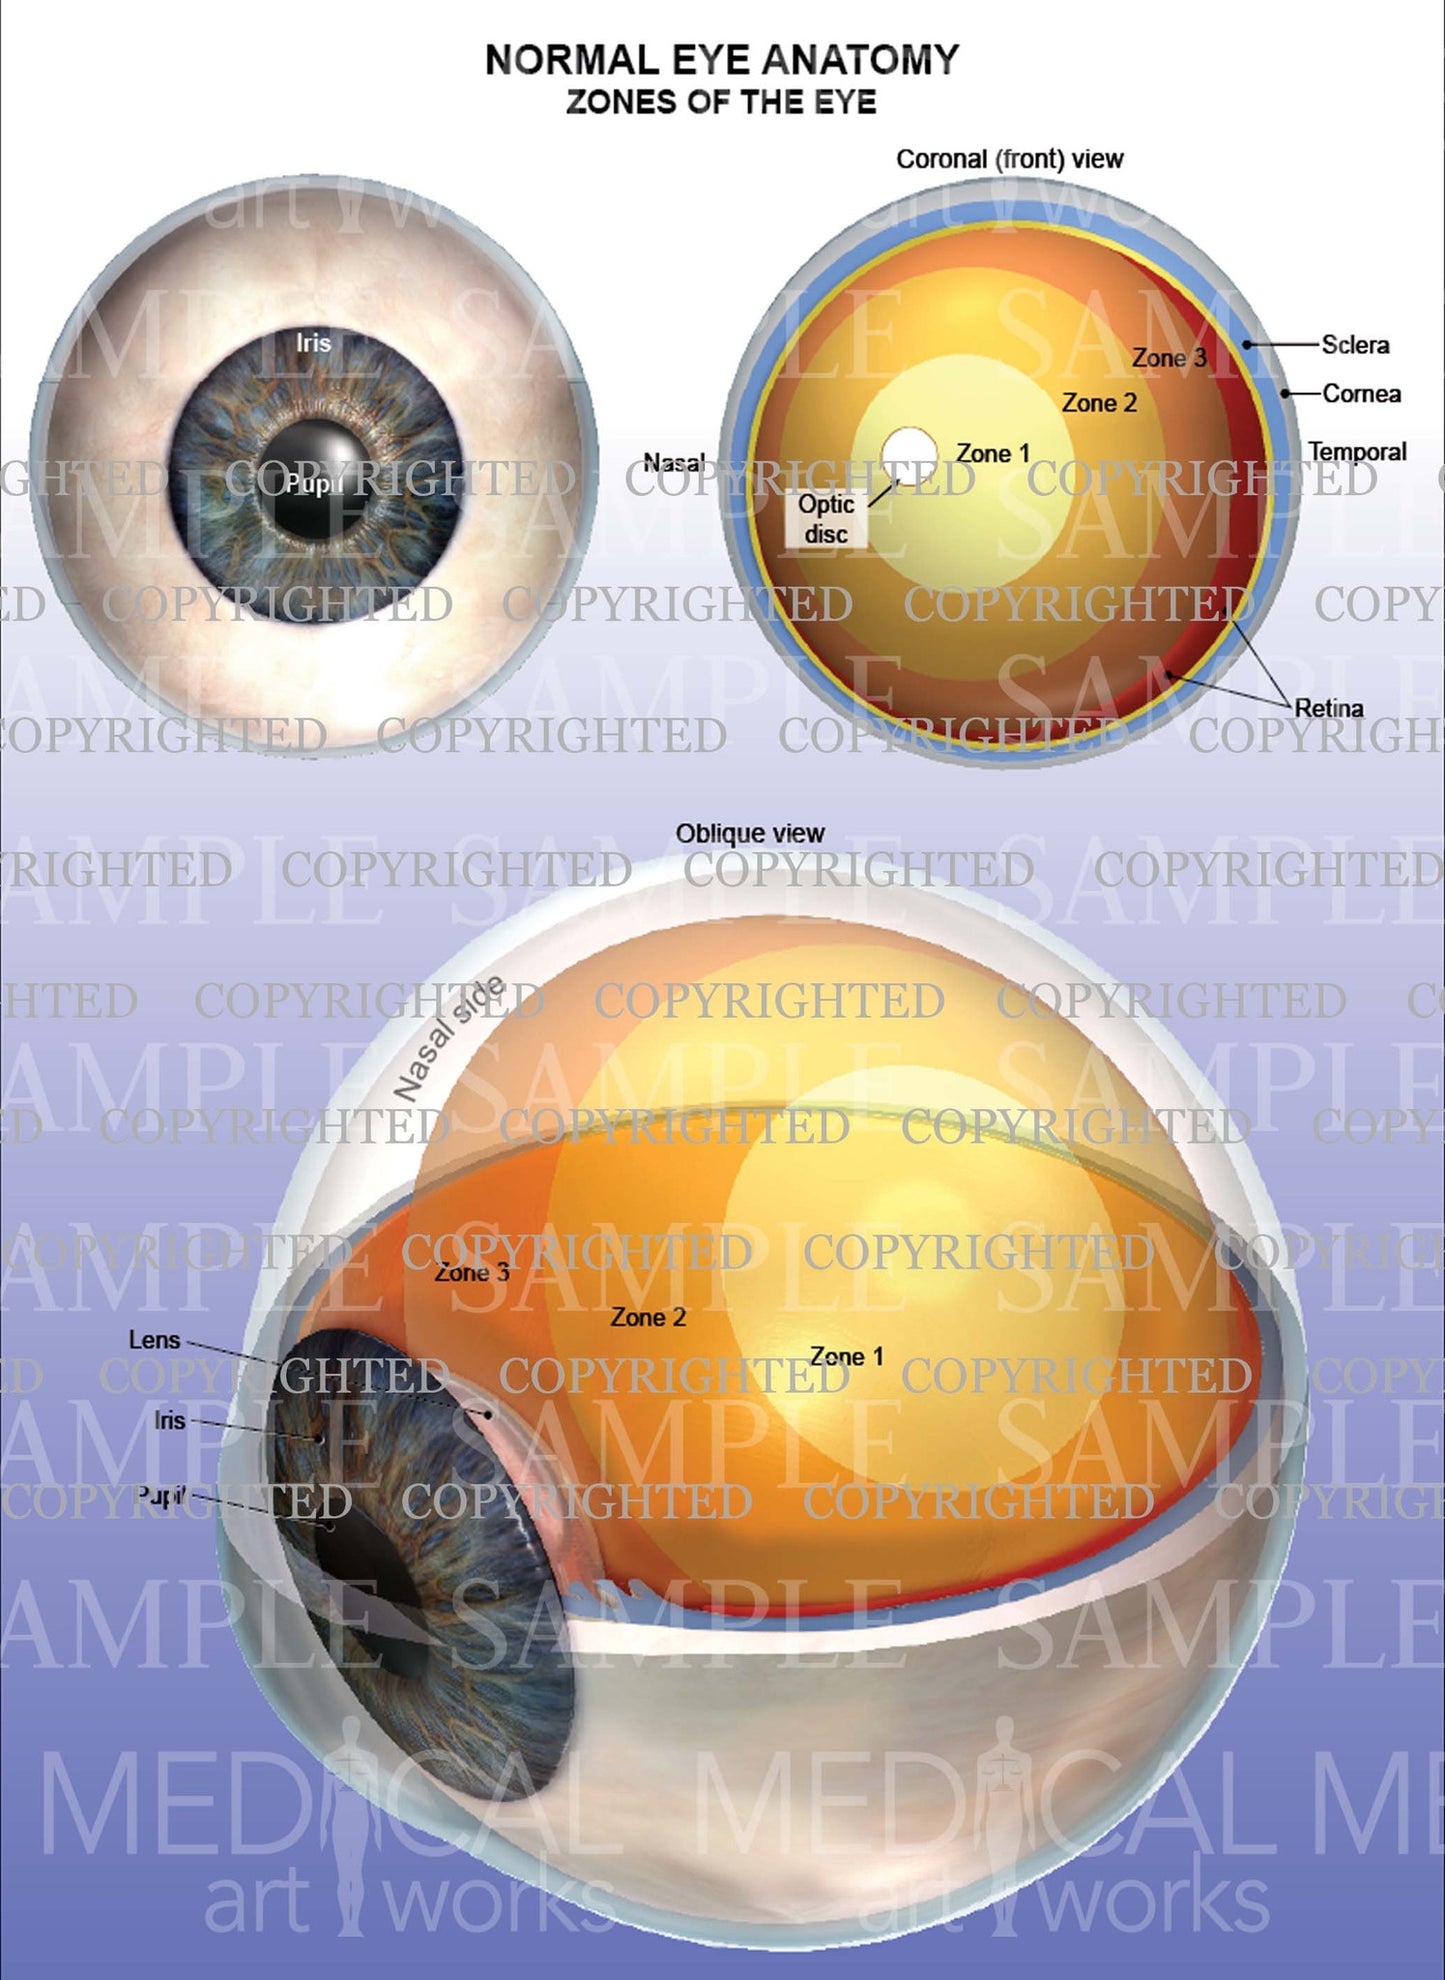 Normal eye anatomy - Zones of the eye - Vertical layout